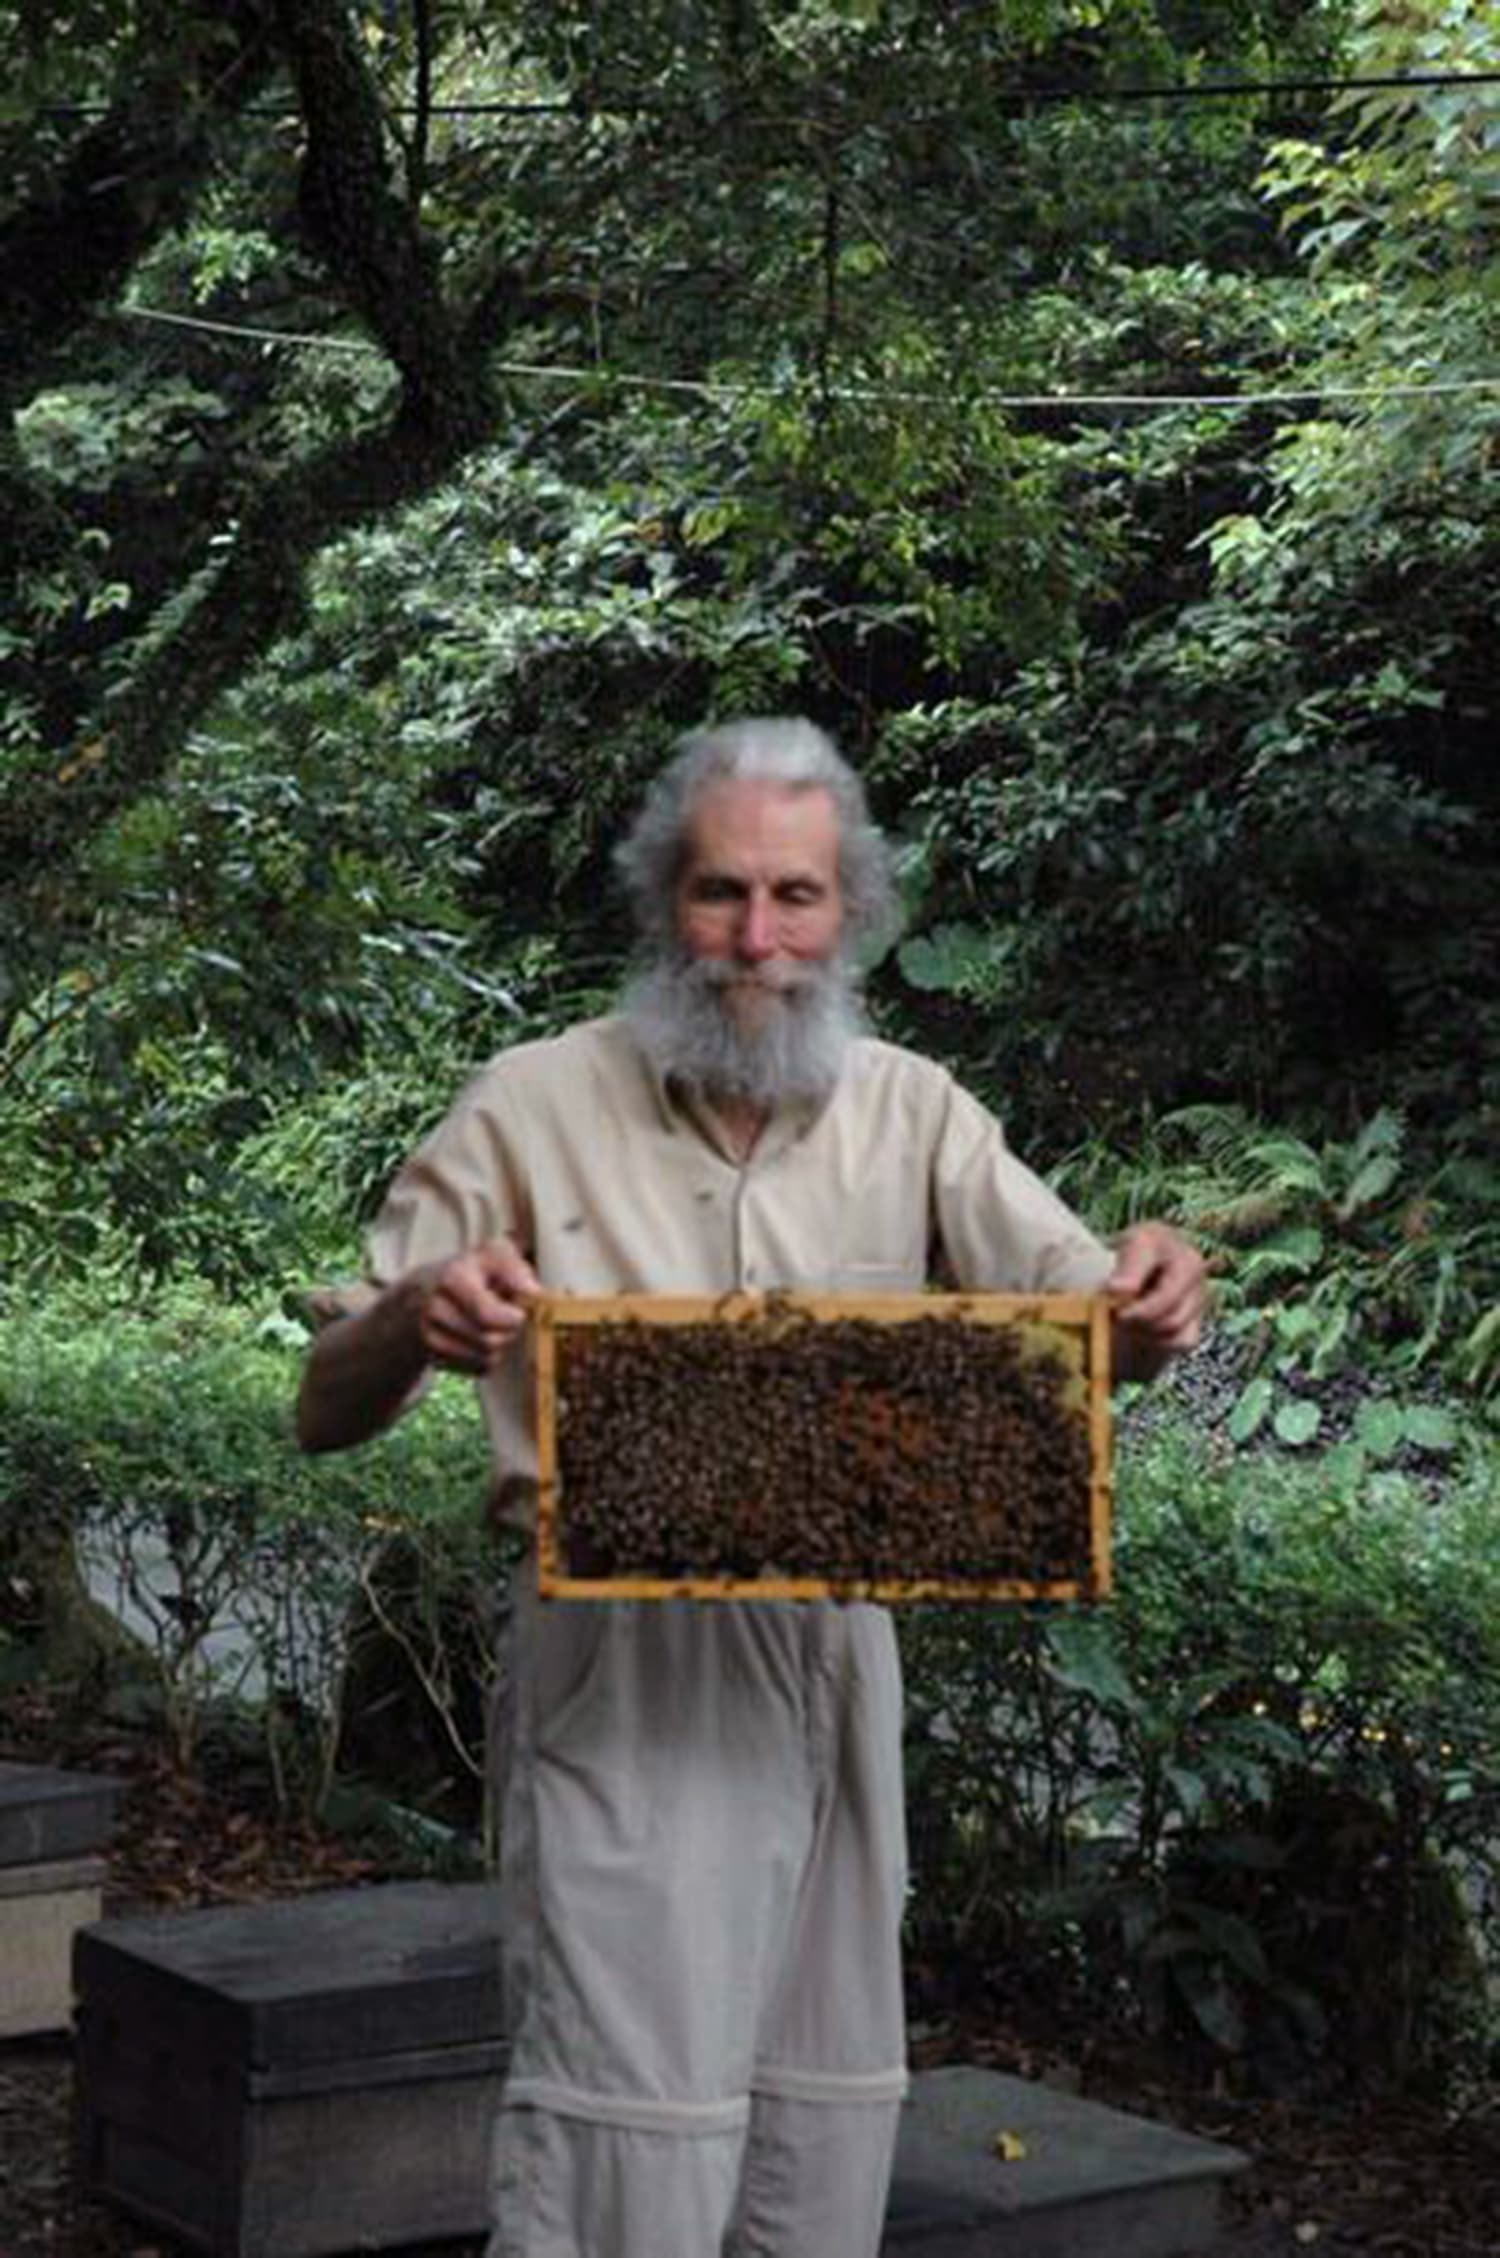 File:Burts Bees Lip Balm.jpg - Wikipedia